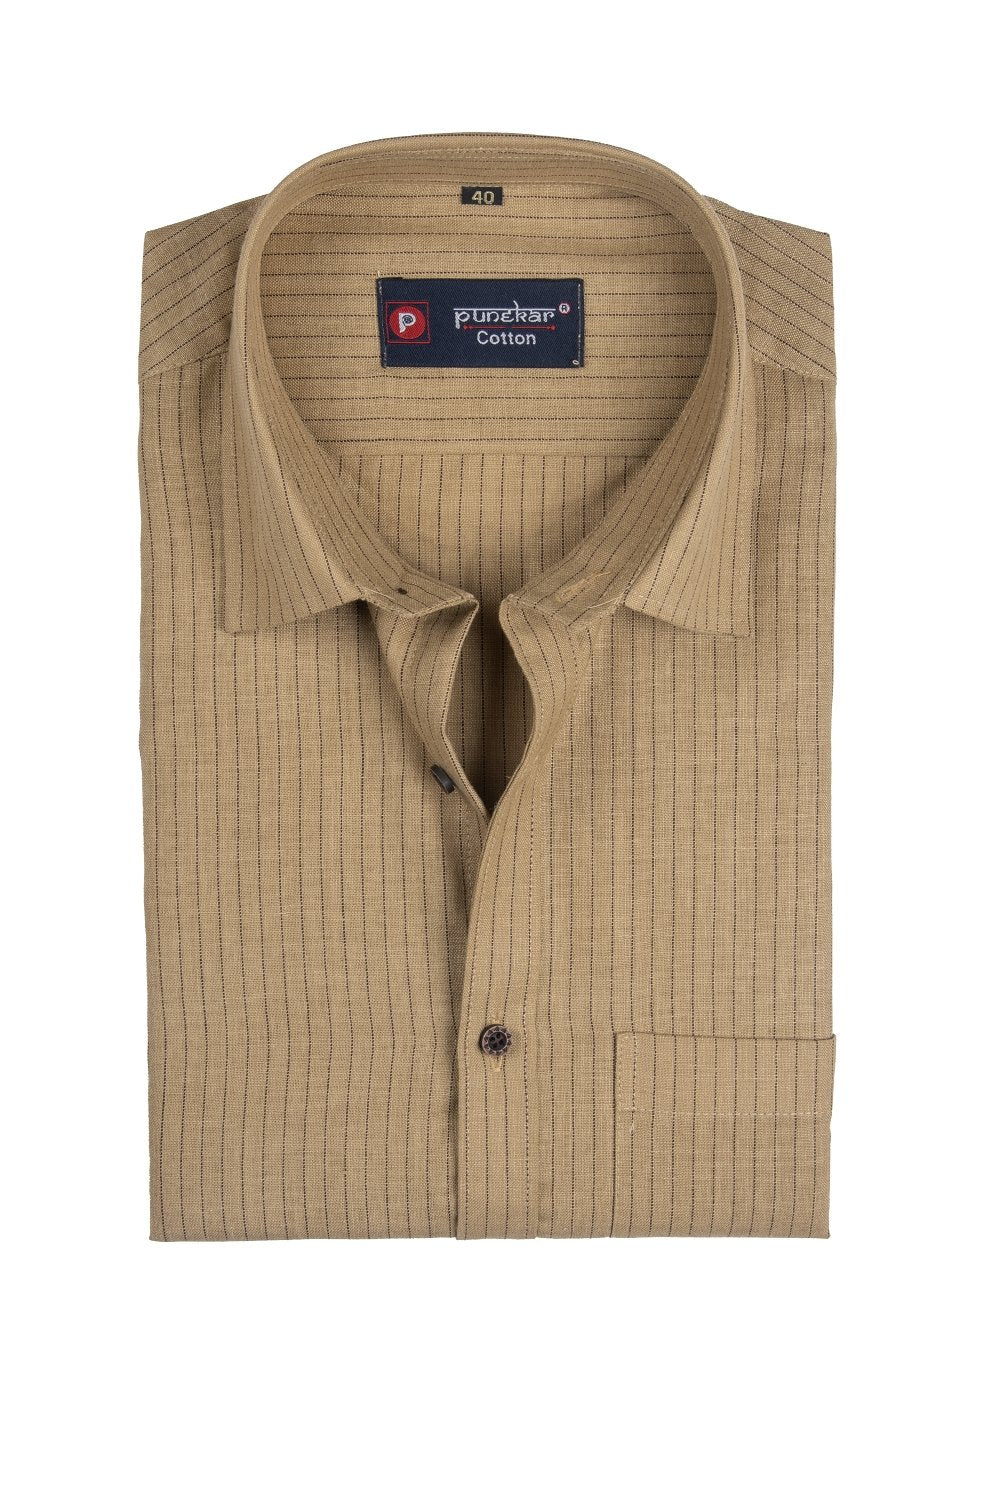 Punekar Cotton Multi Color Linning Criss Cross Woven Cotton Shirt for Men&